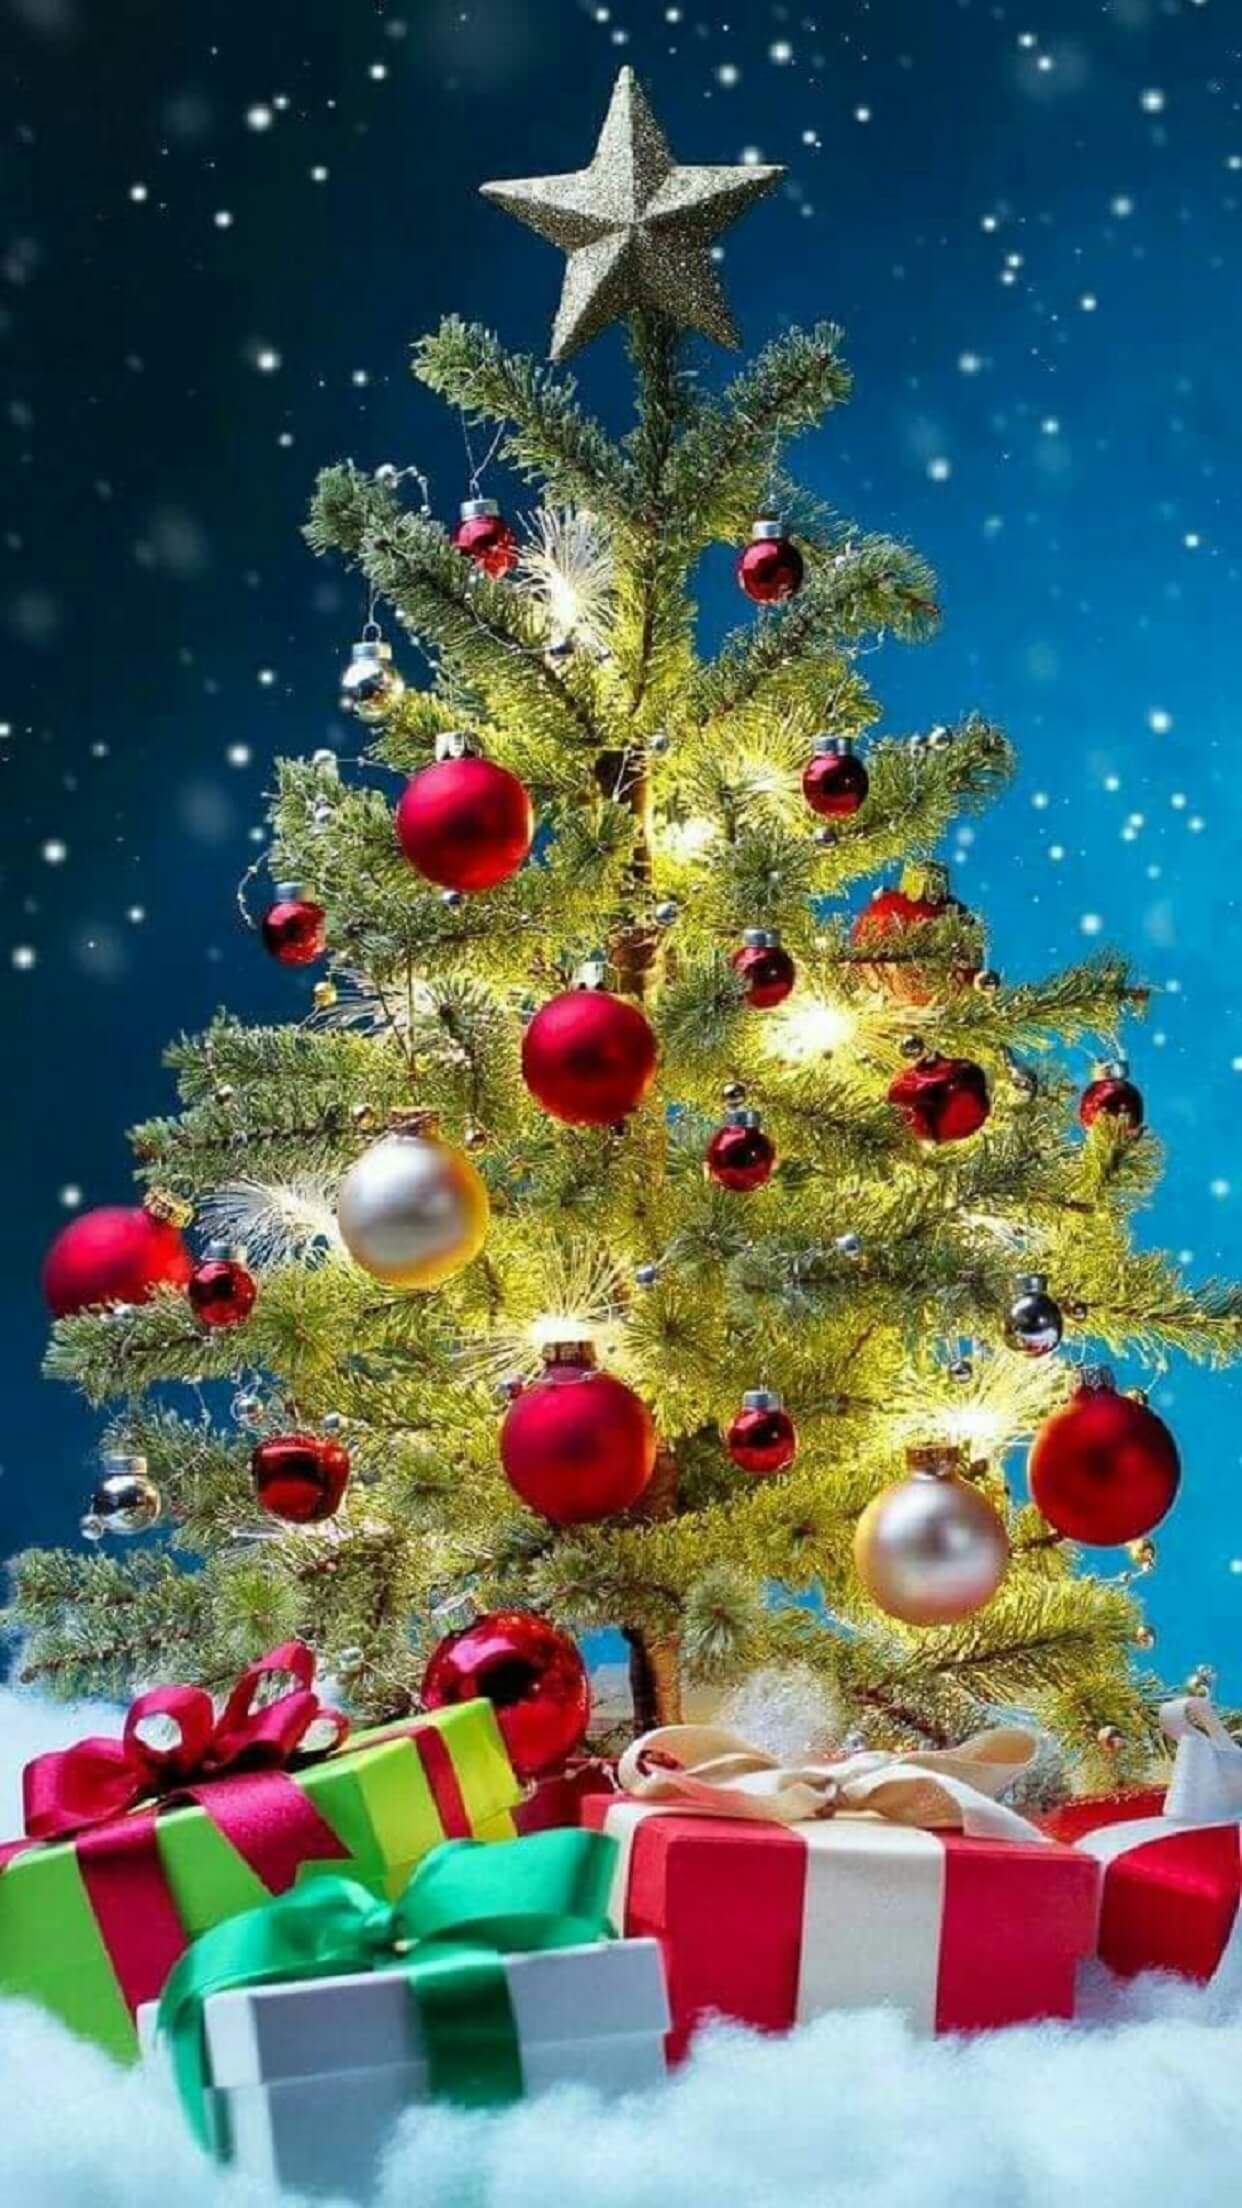 Christmas Photo, Beautiful, Christmas, Decoration, Image, Star, Tree, White, Events